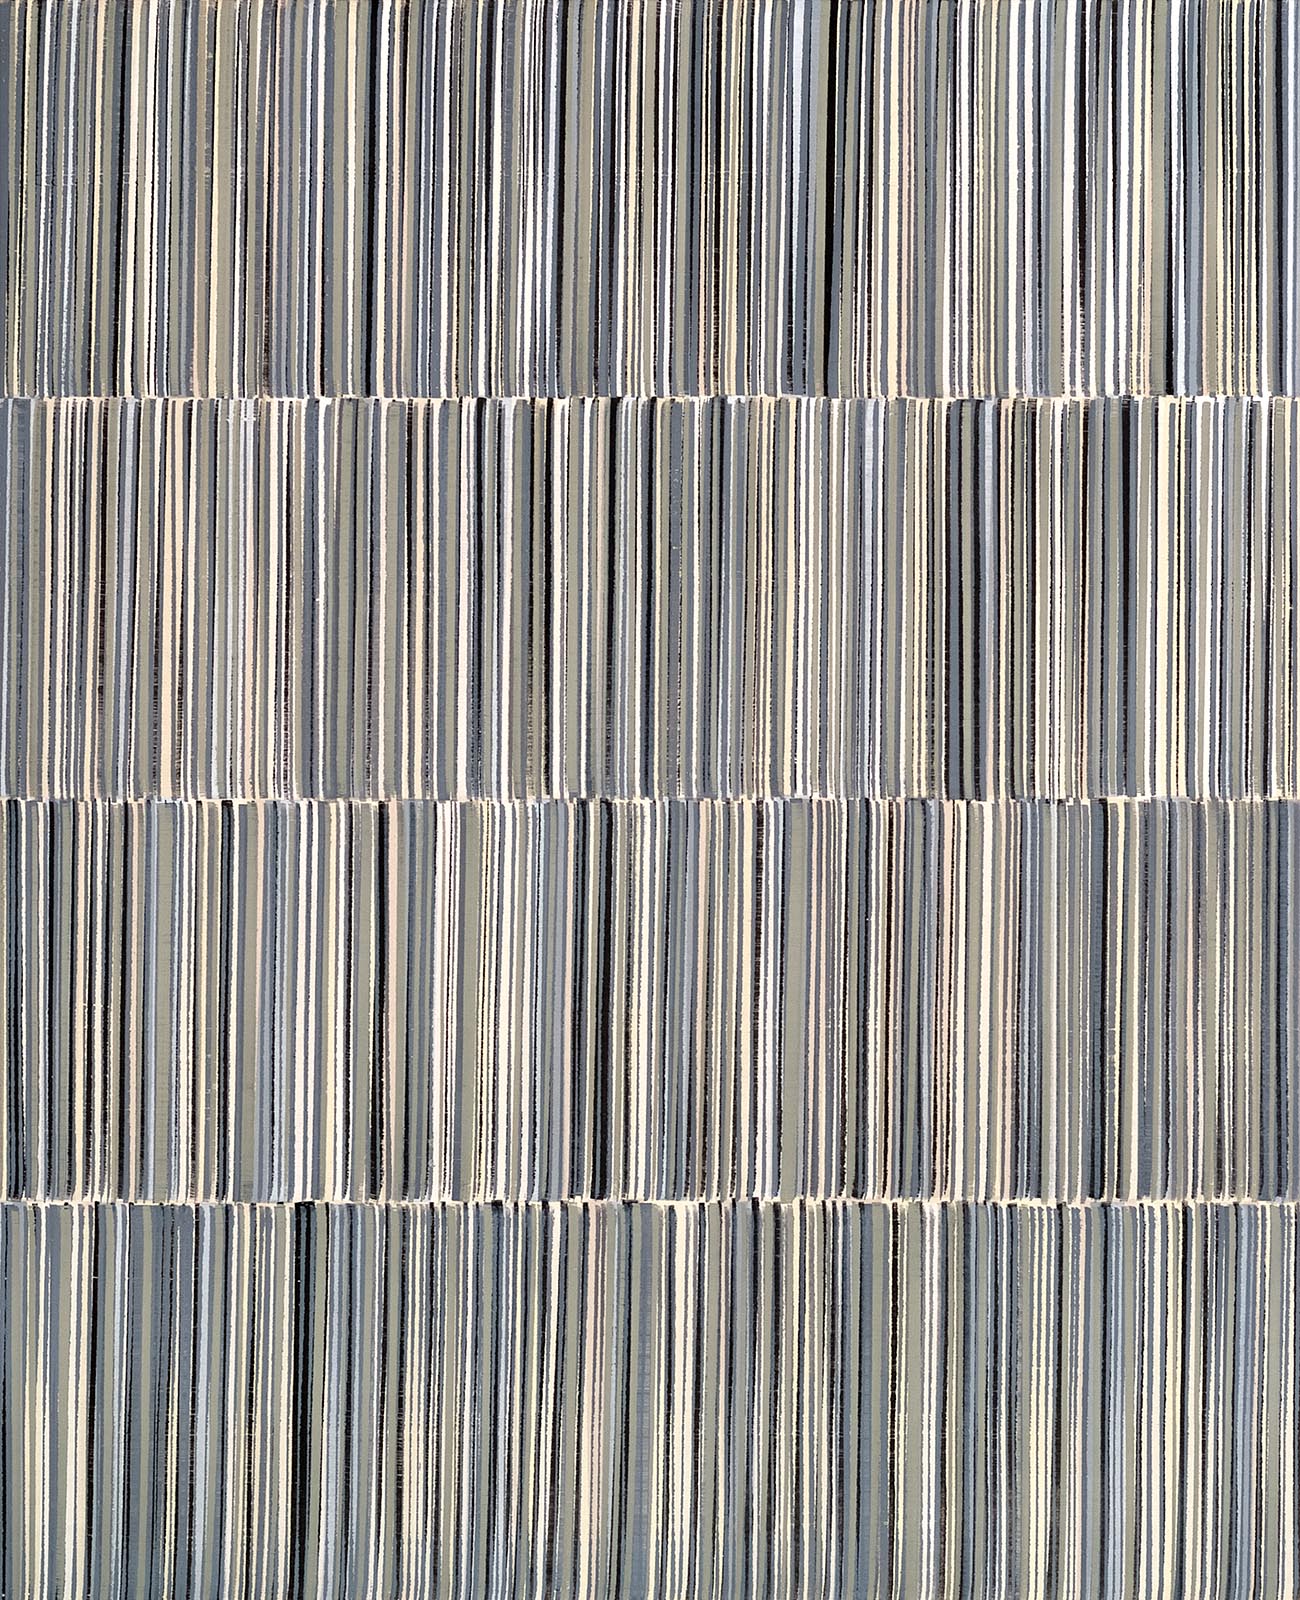 Nikola Dimitrov, Komposition IV, 2016, Pigmente, Bindemittel, Lösungsmittel auf Leinwand, 160 x 130 cm